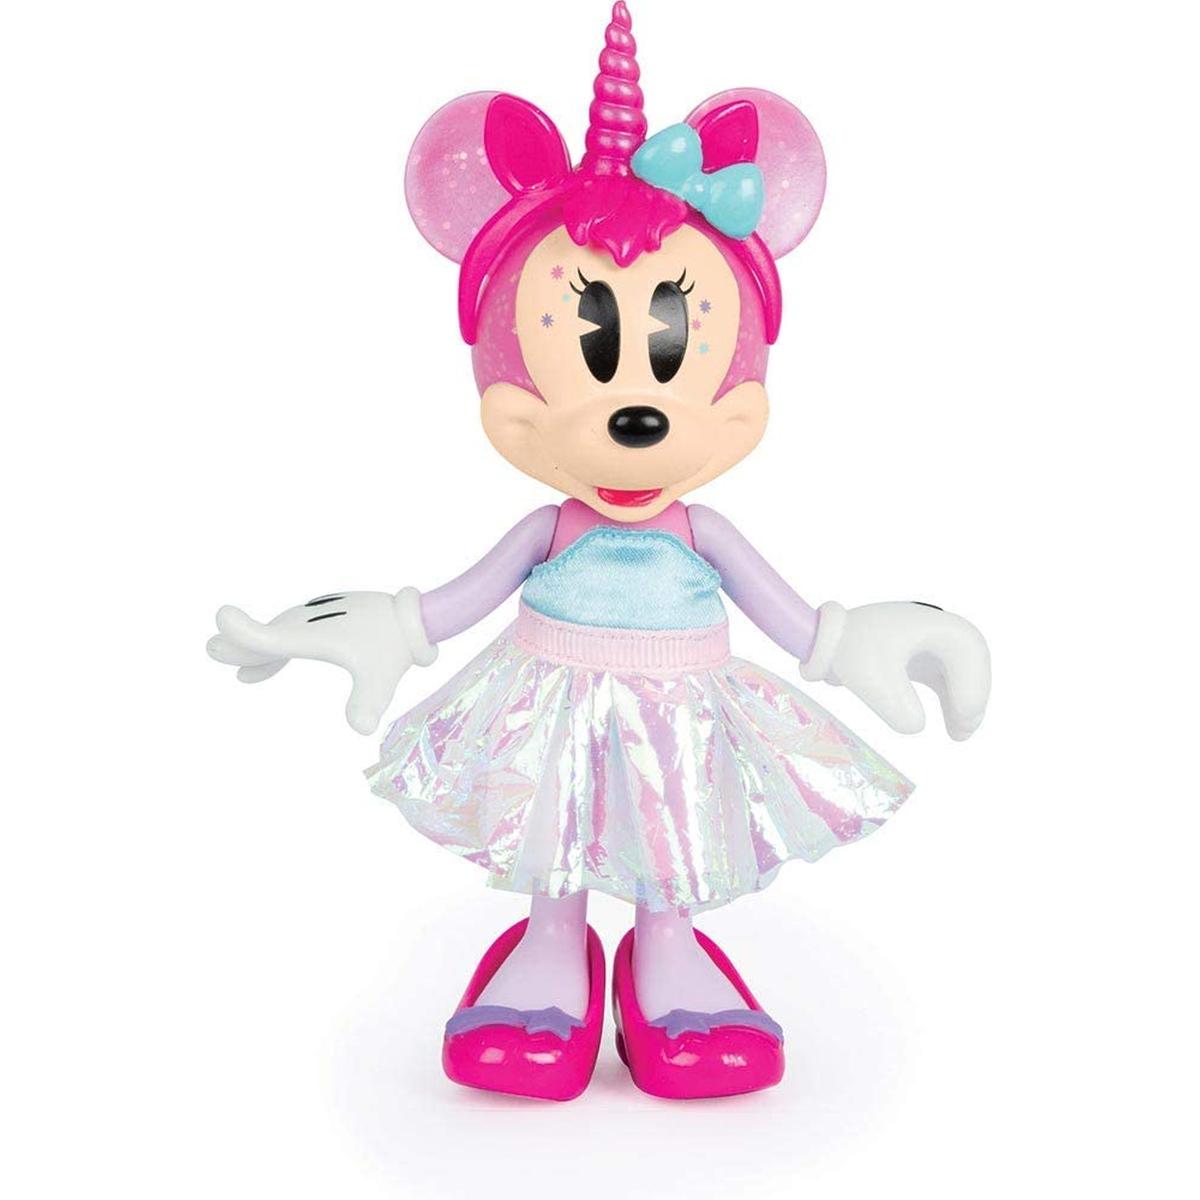 Minnie Mouse - Boneca Minnie Fashion Rainbow Glow | MINNIE MOUSE. CAT 54 |  Loja de brinquedos e videojogos Online Toysrus